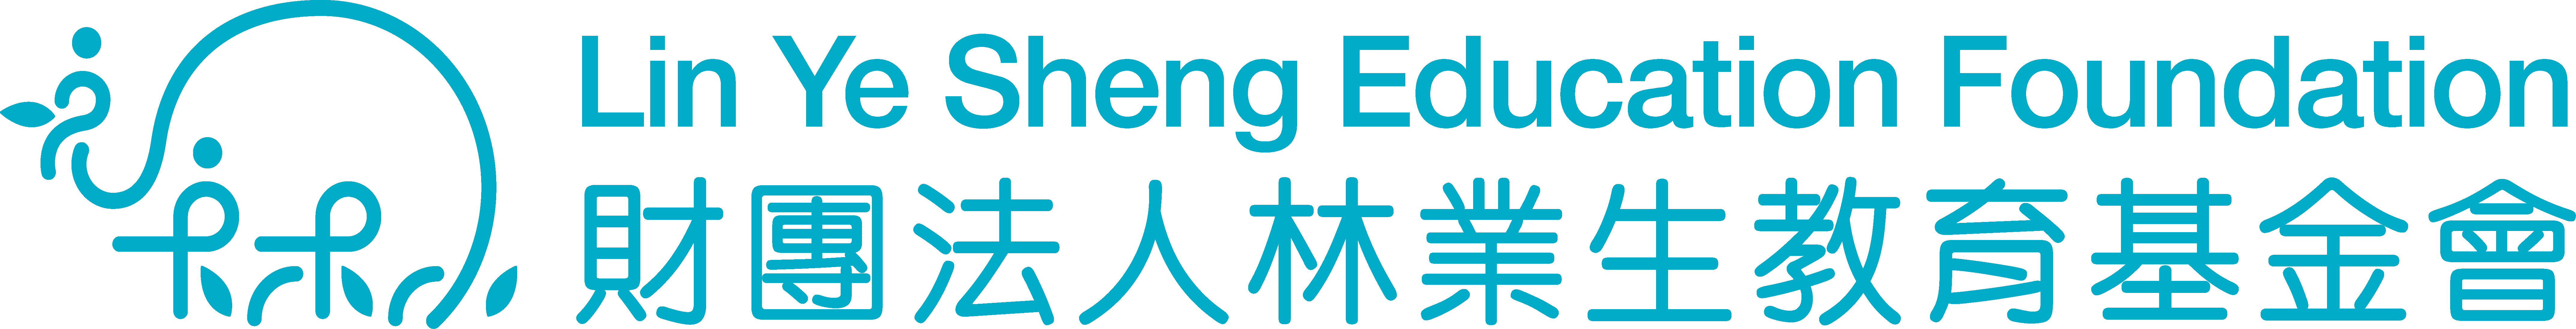 Lin Ye Sheng Education Foundation Logo